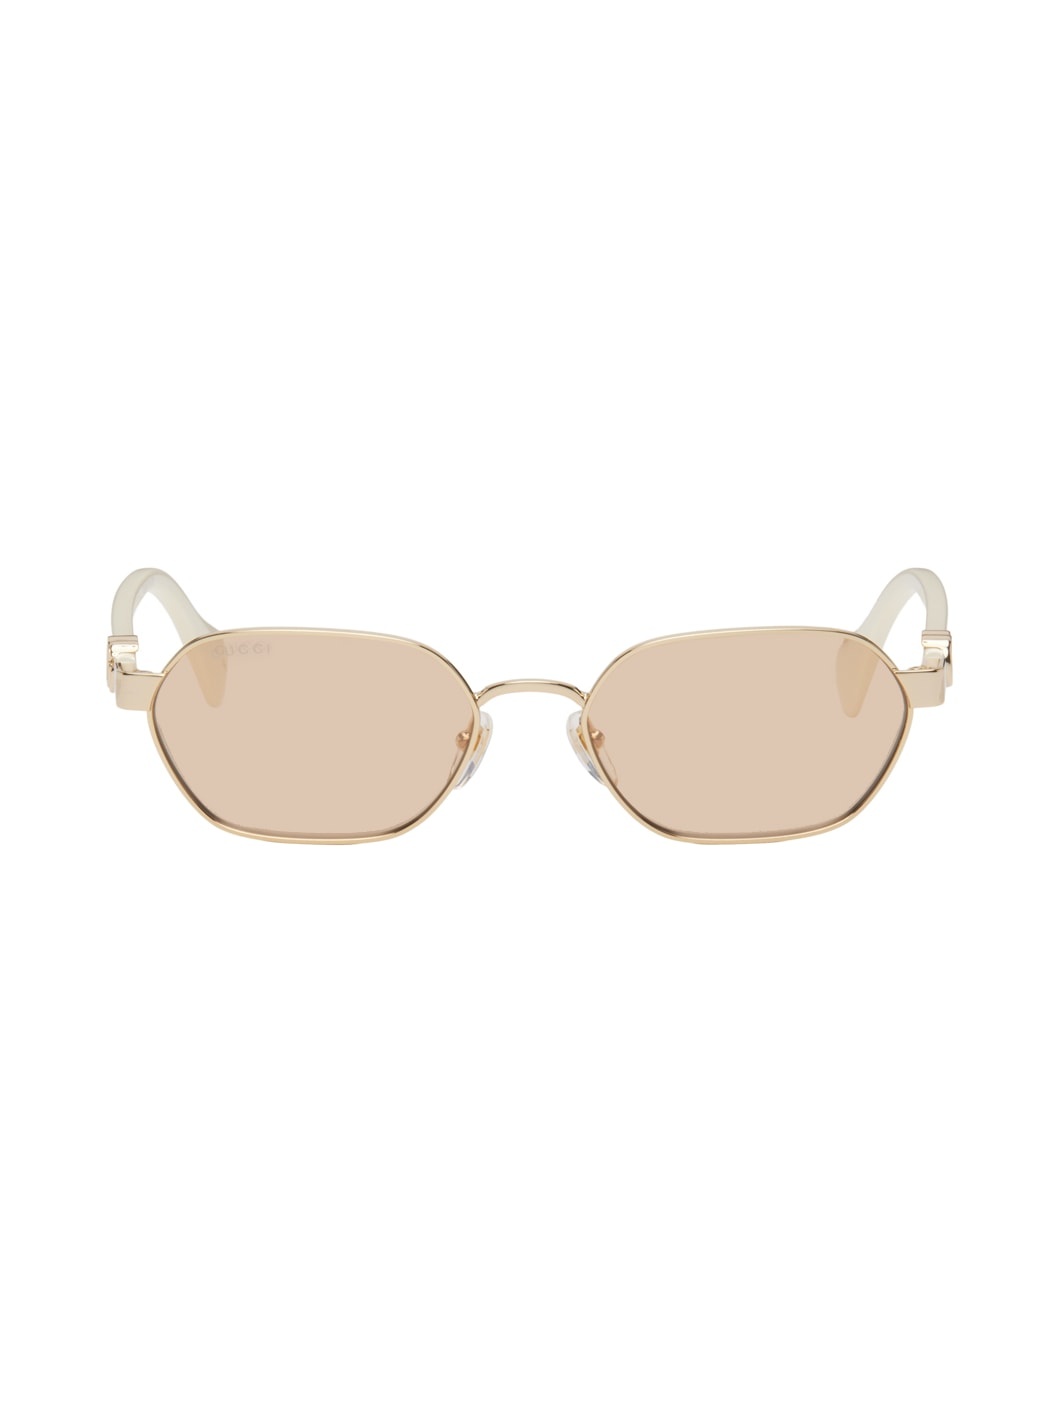 Gold & White Round Sunglasses - 1